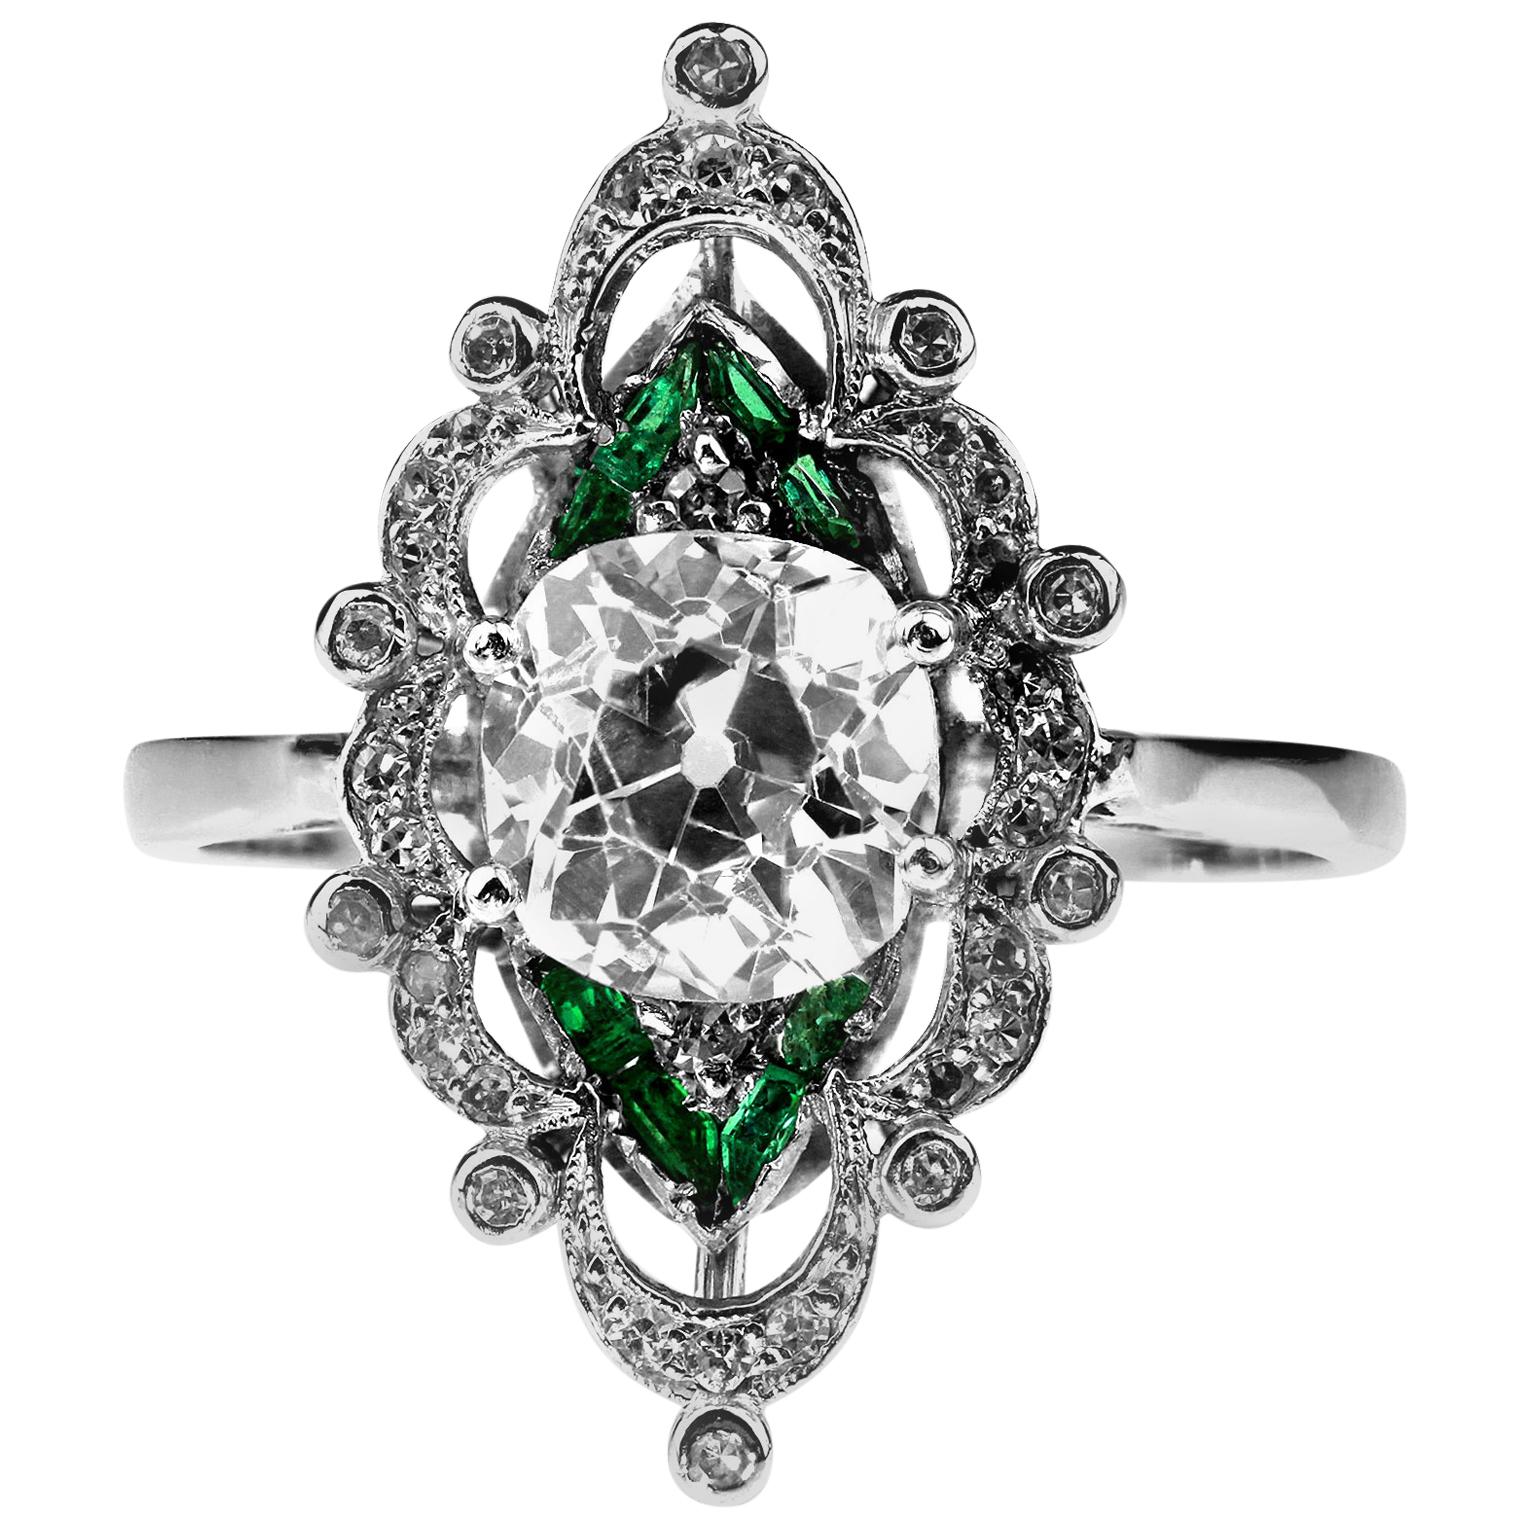 Antique Edwardian Old Cut Cushion Diamond 2.0cts & Emerald Ring in Platinum